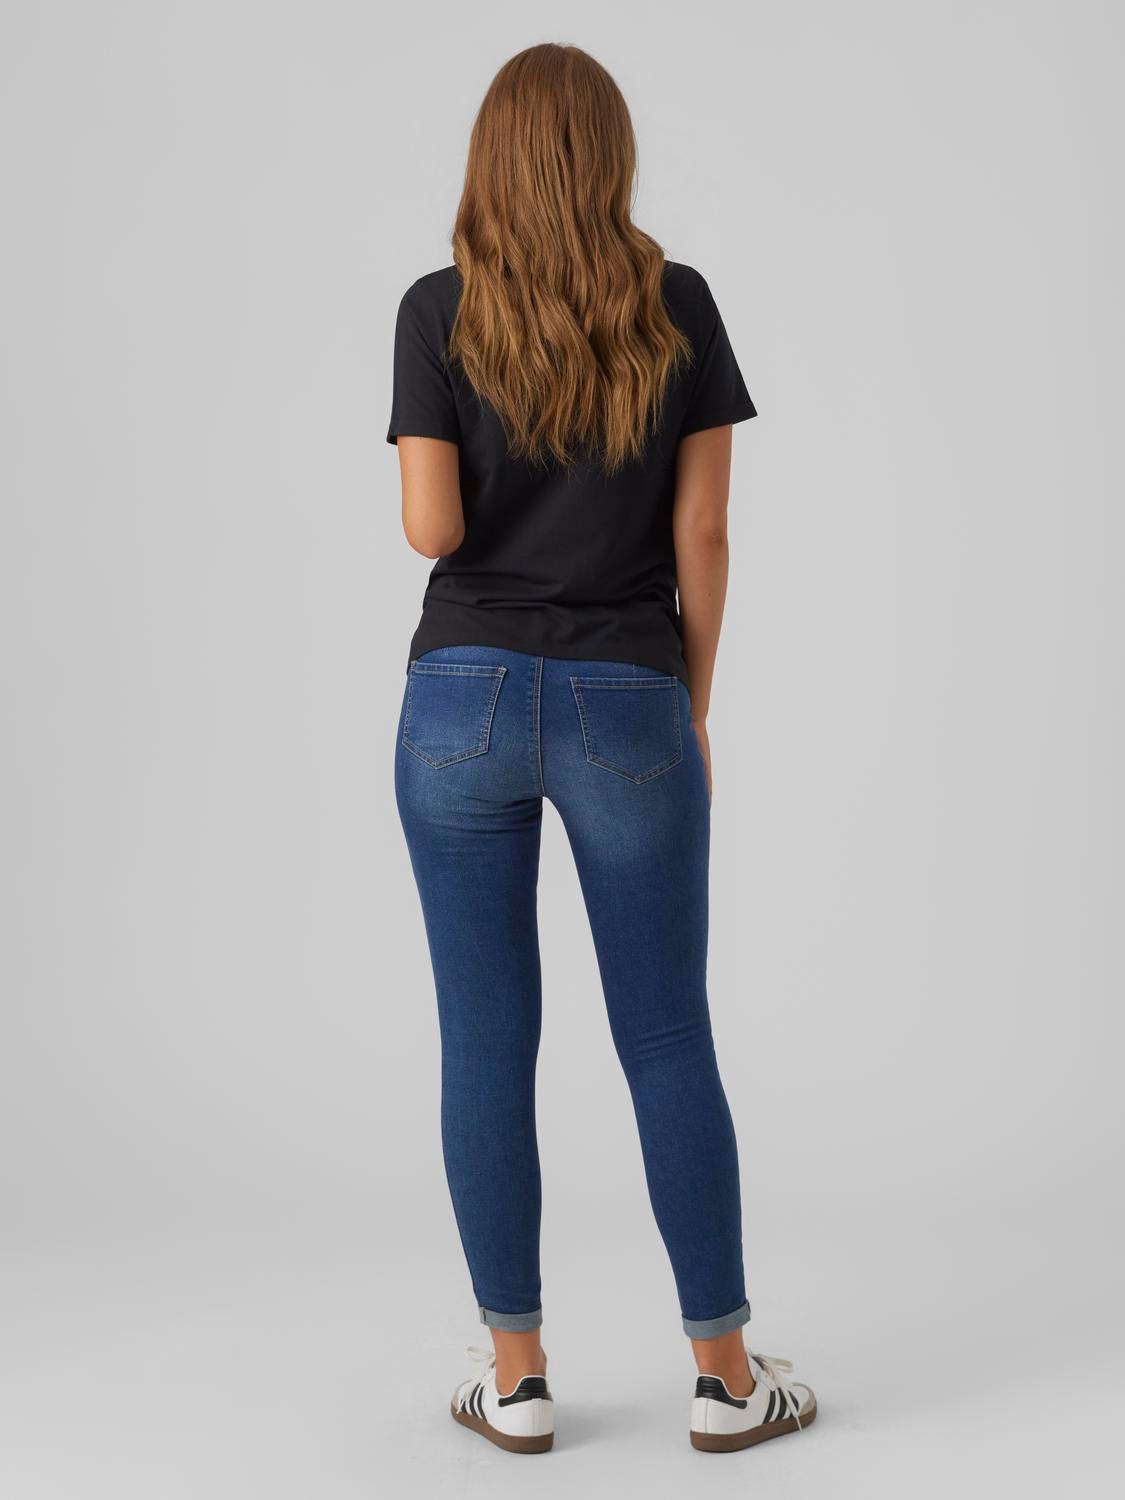 Skinny Fold Jeans Fit up waist hems Low